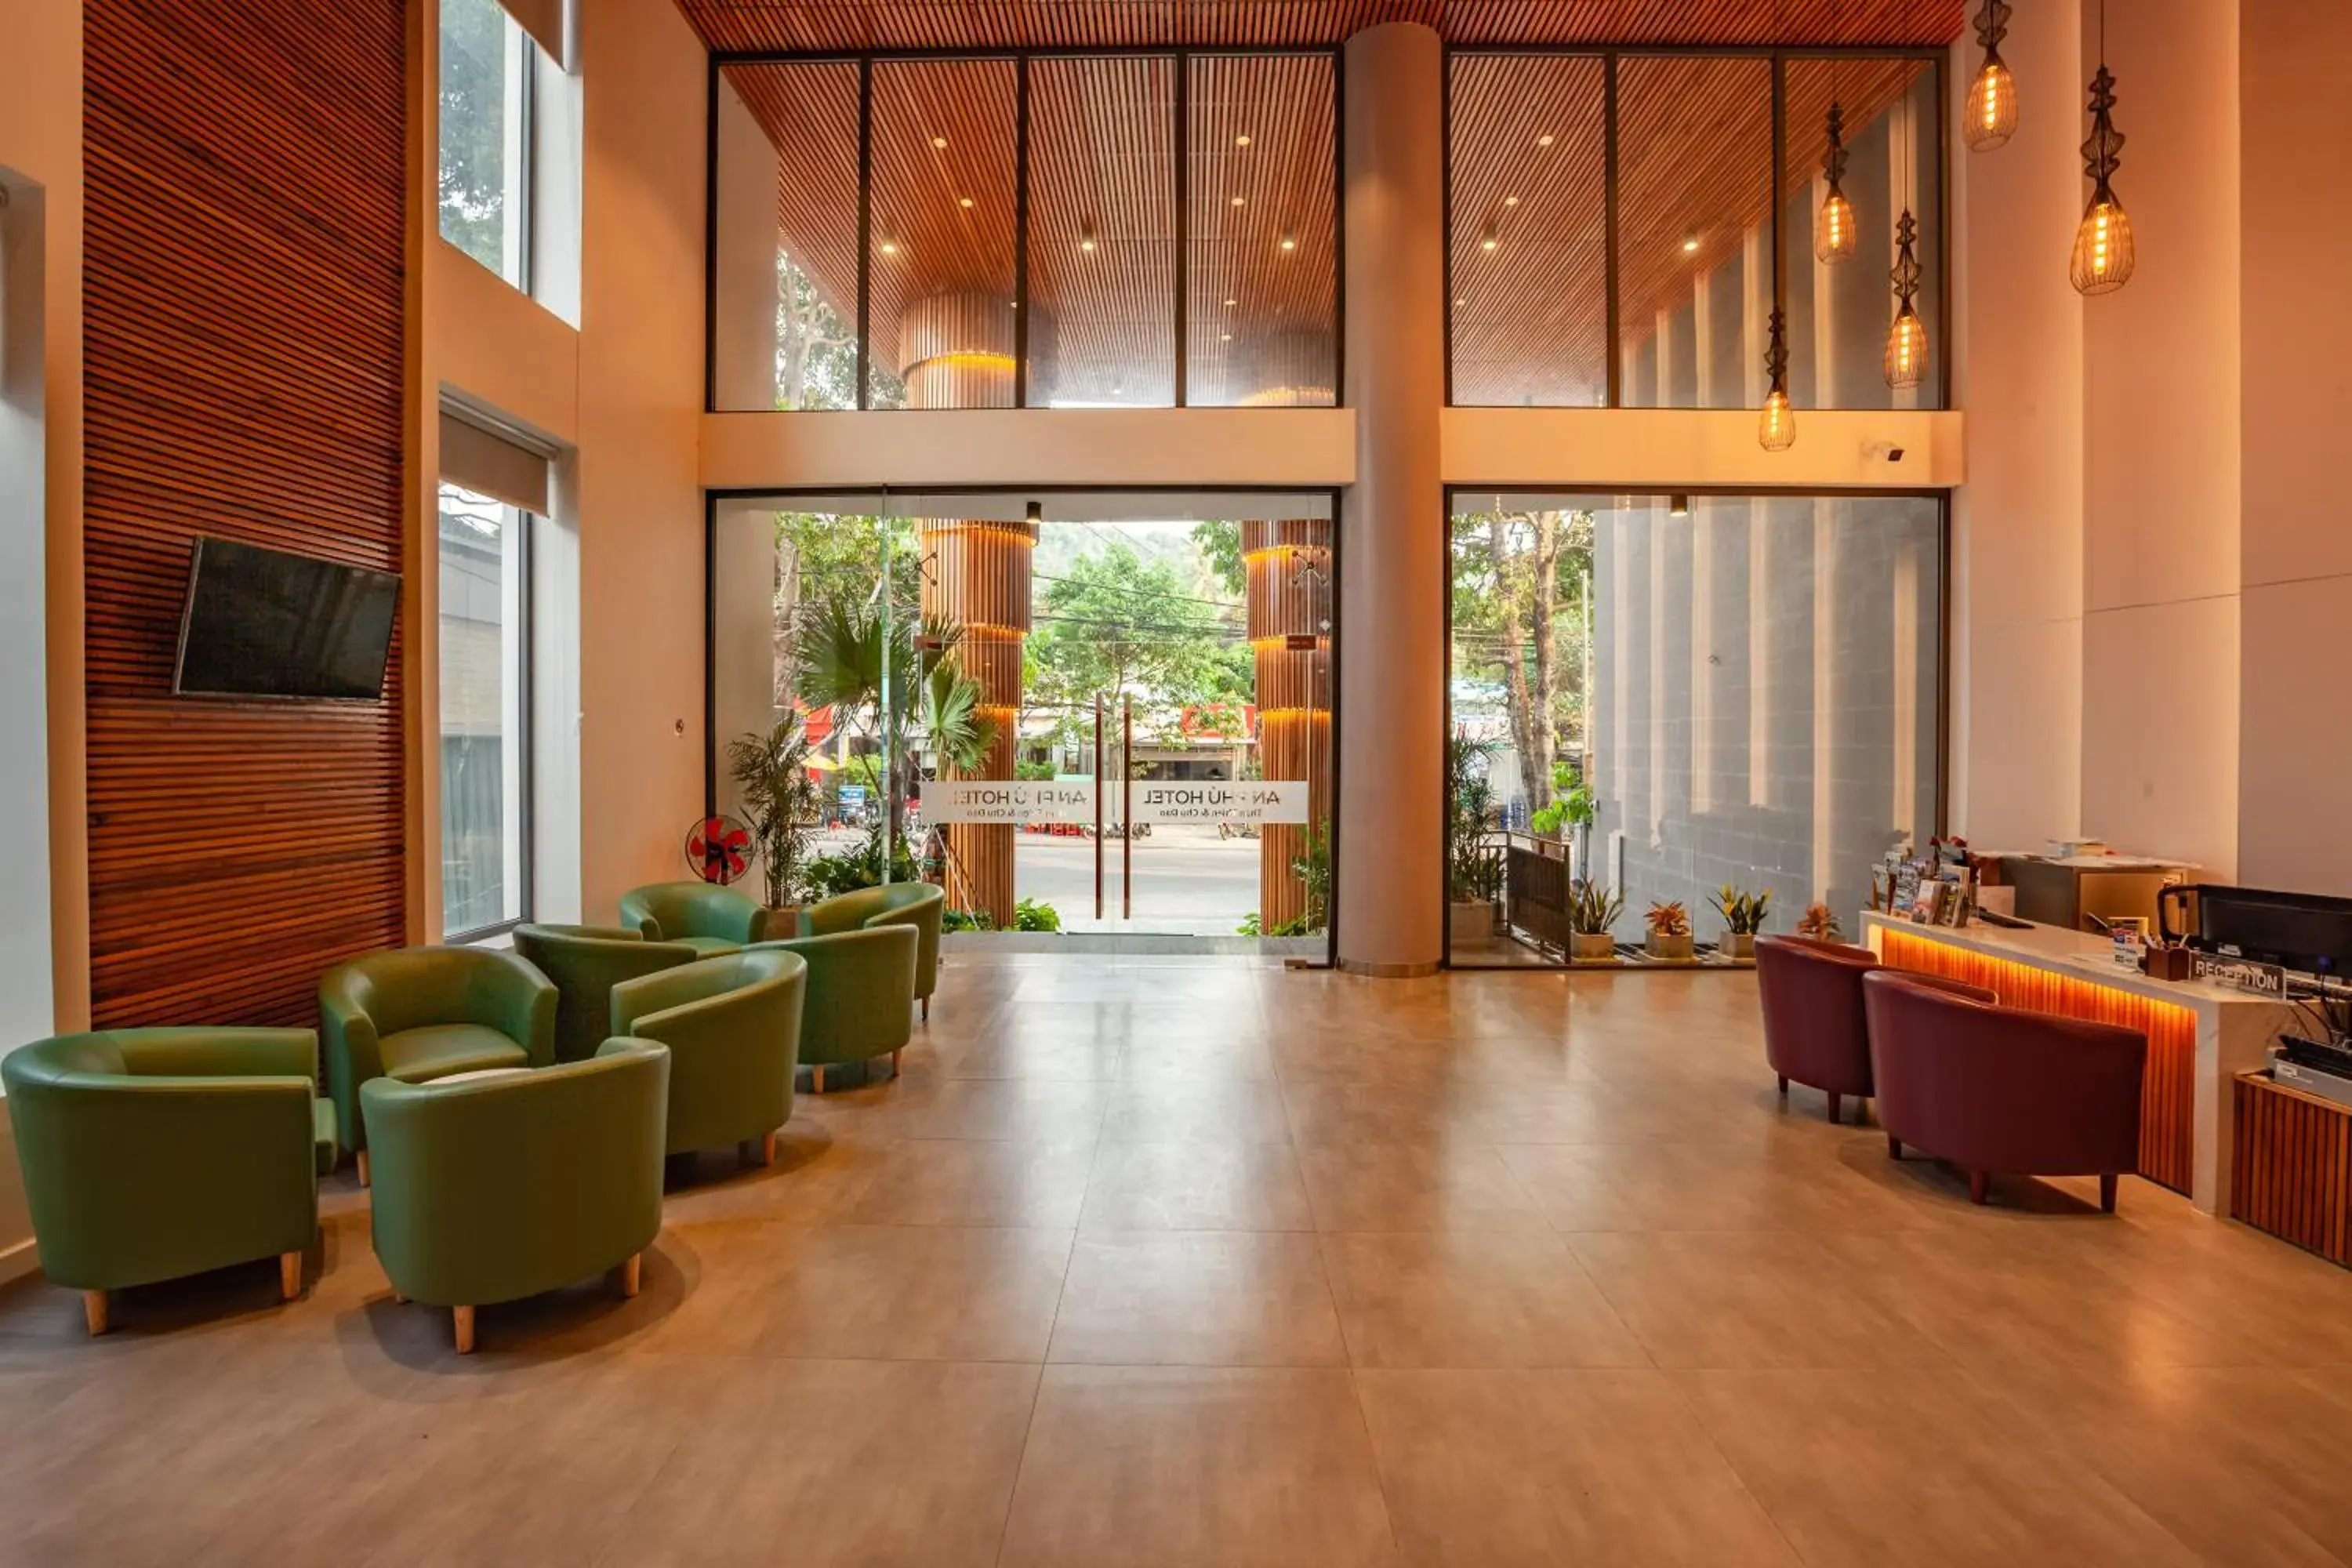 Lobby or reception in An Phu Hotel